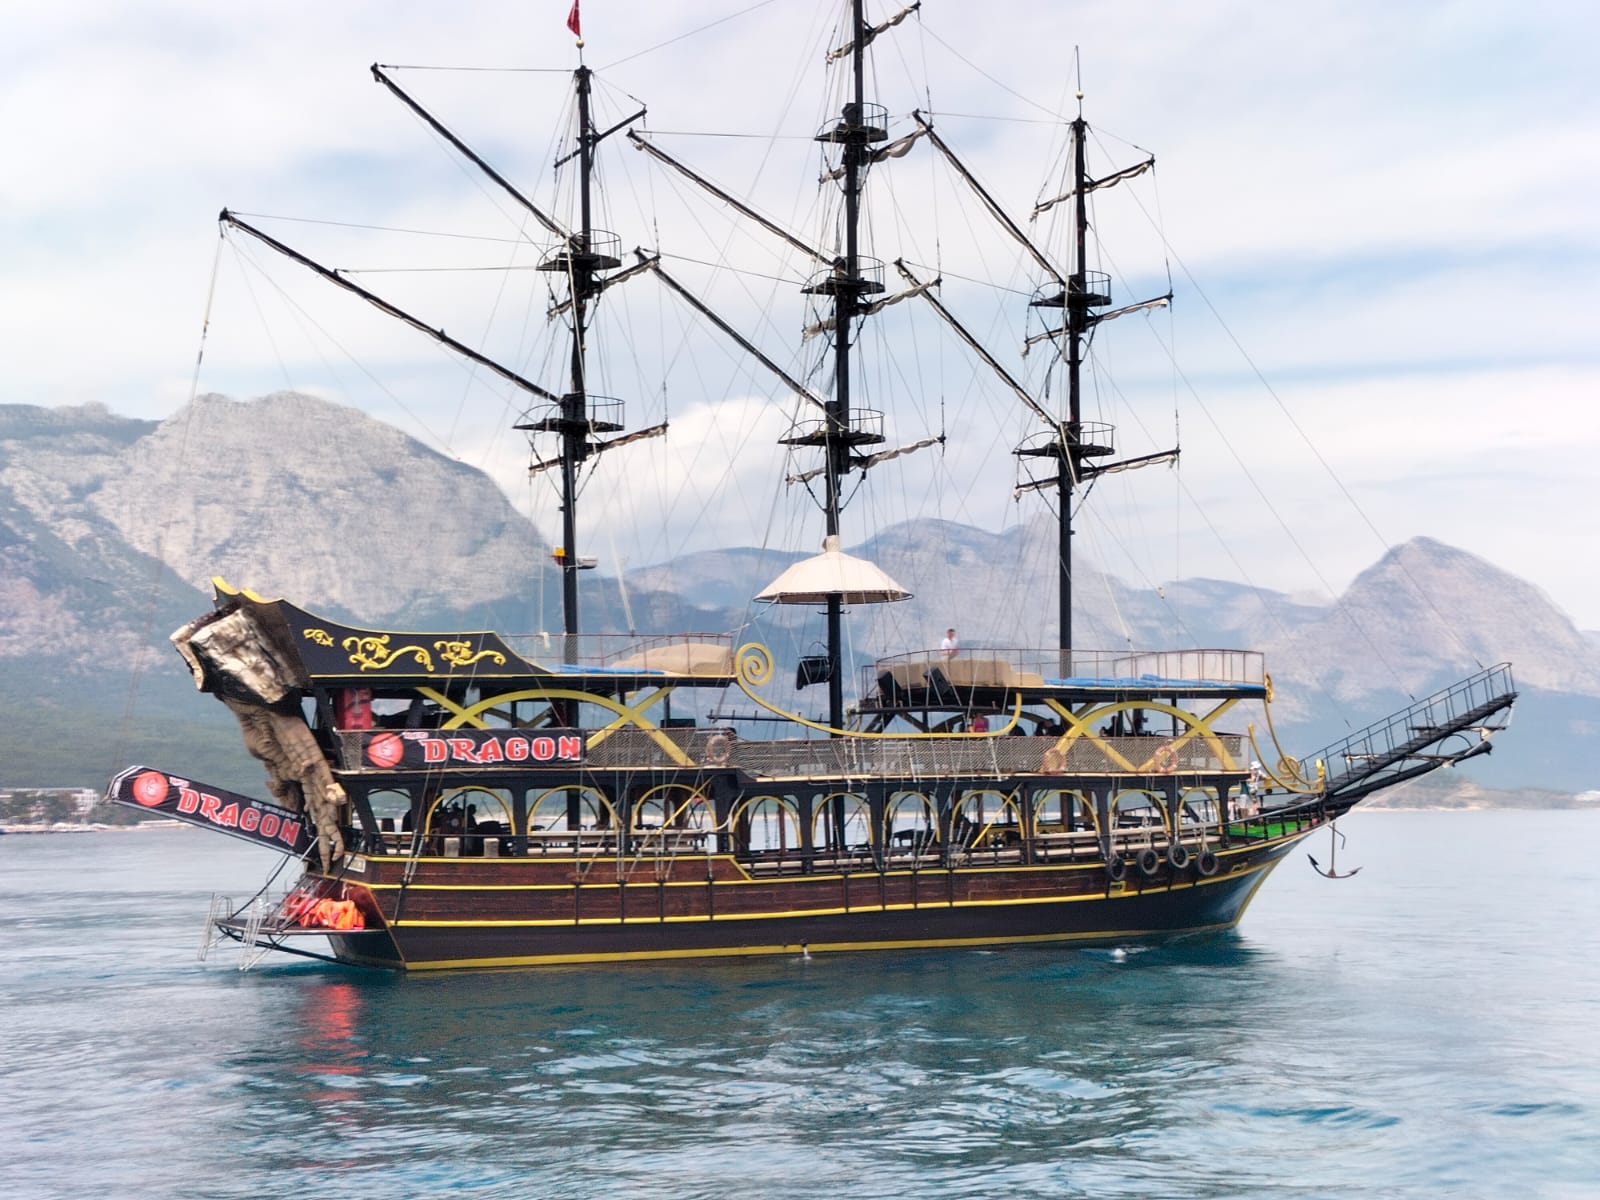 Boat trip to Kemer from Antalya (Pirate Ship)